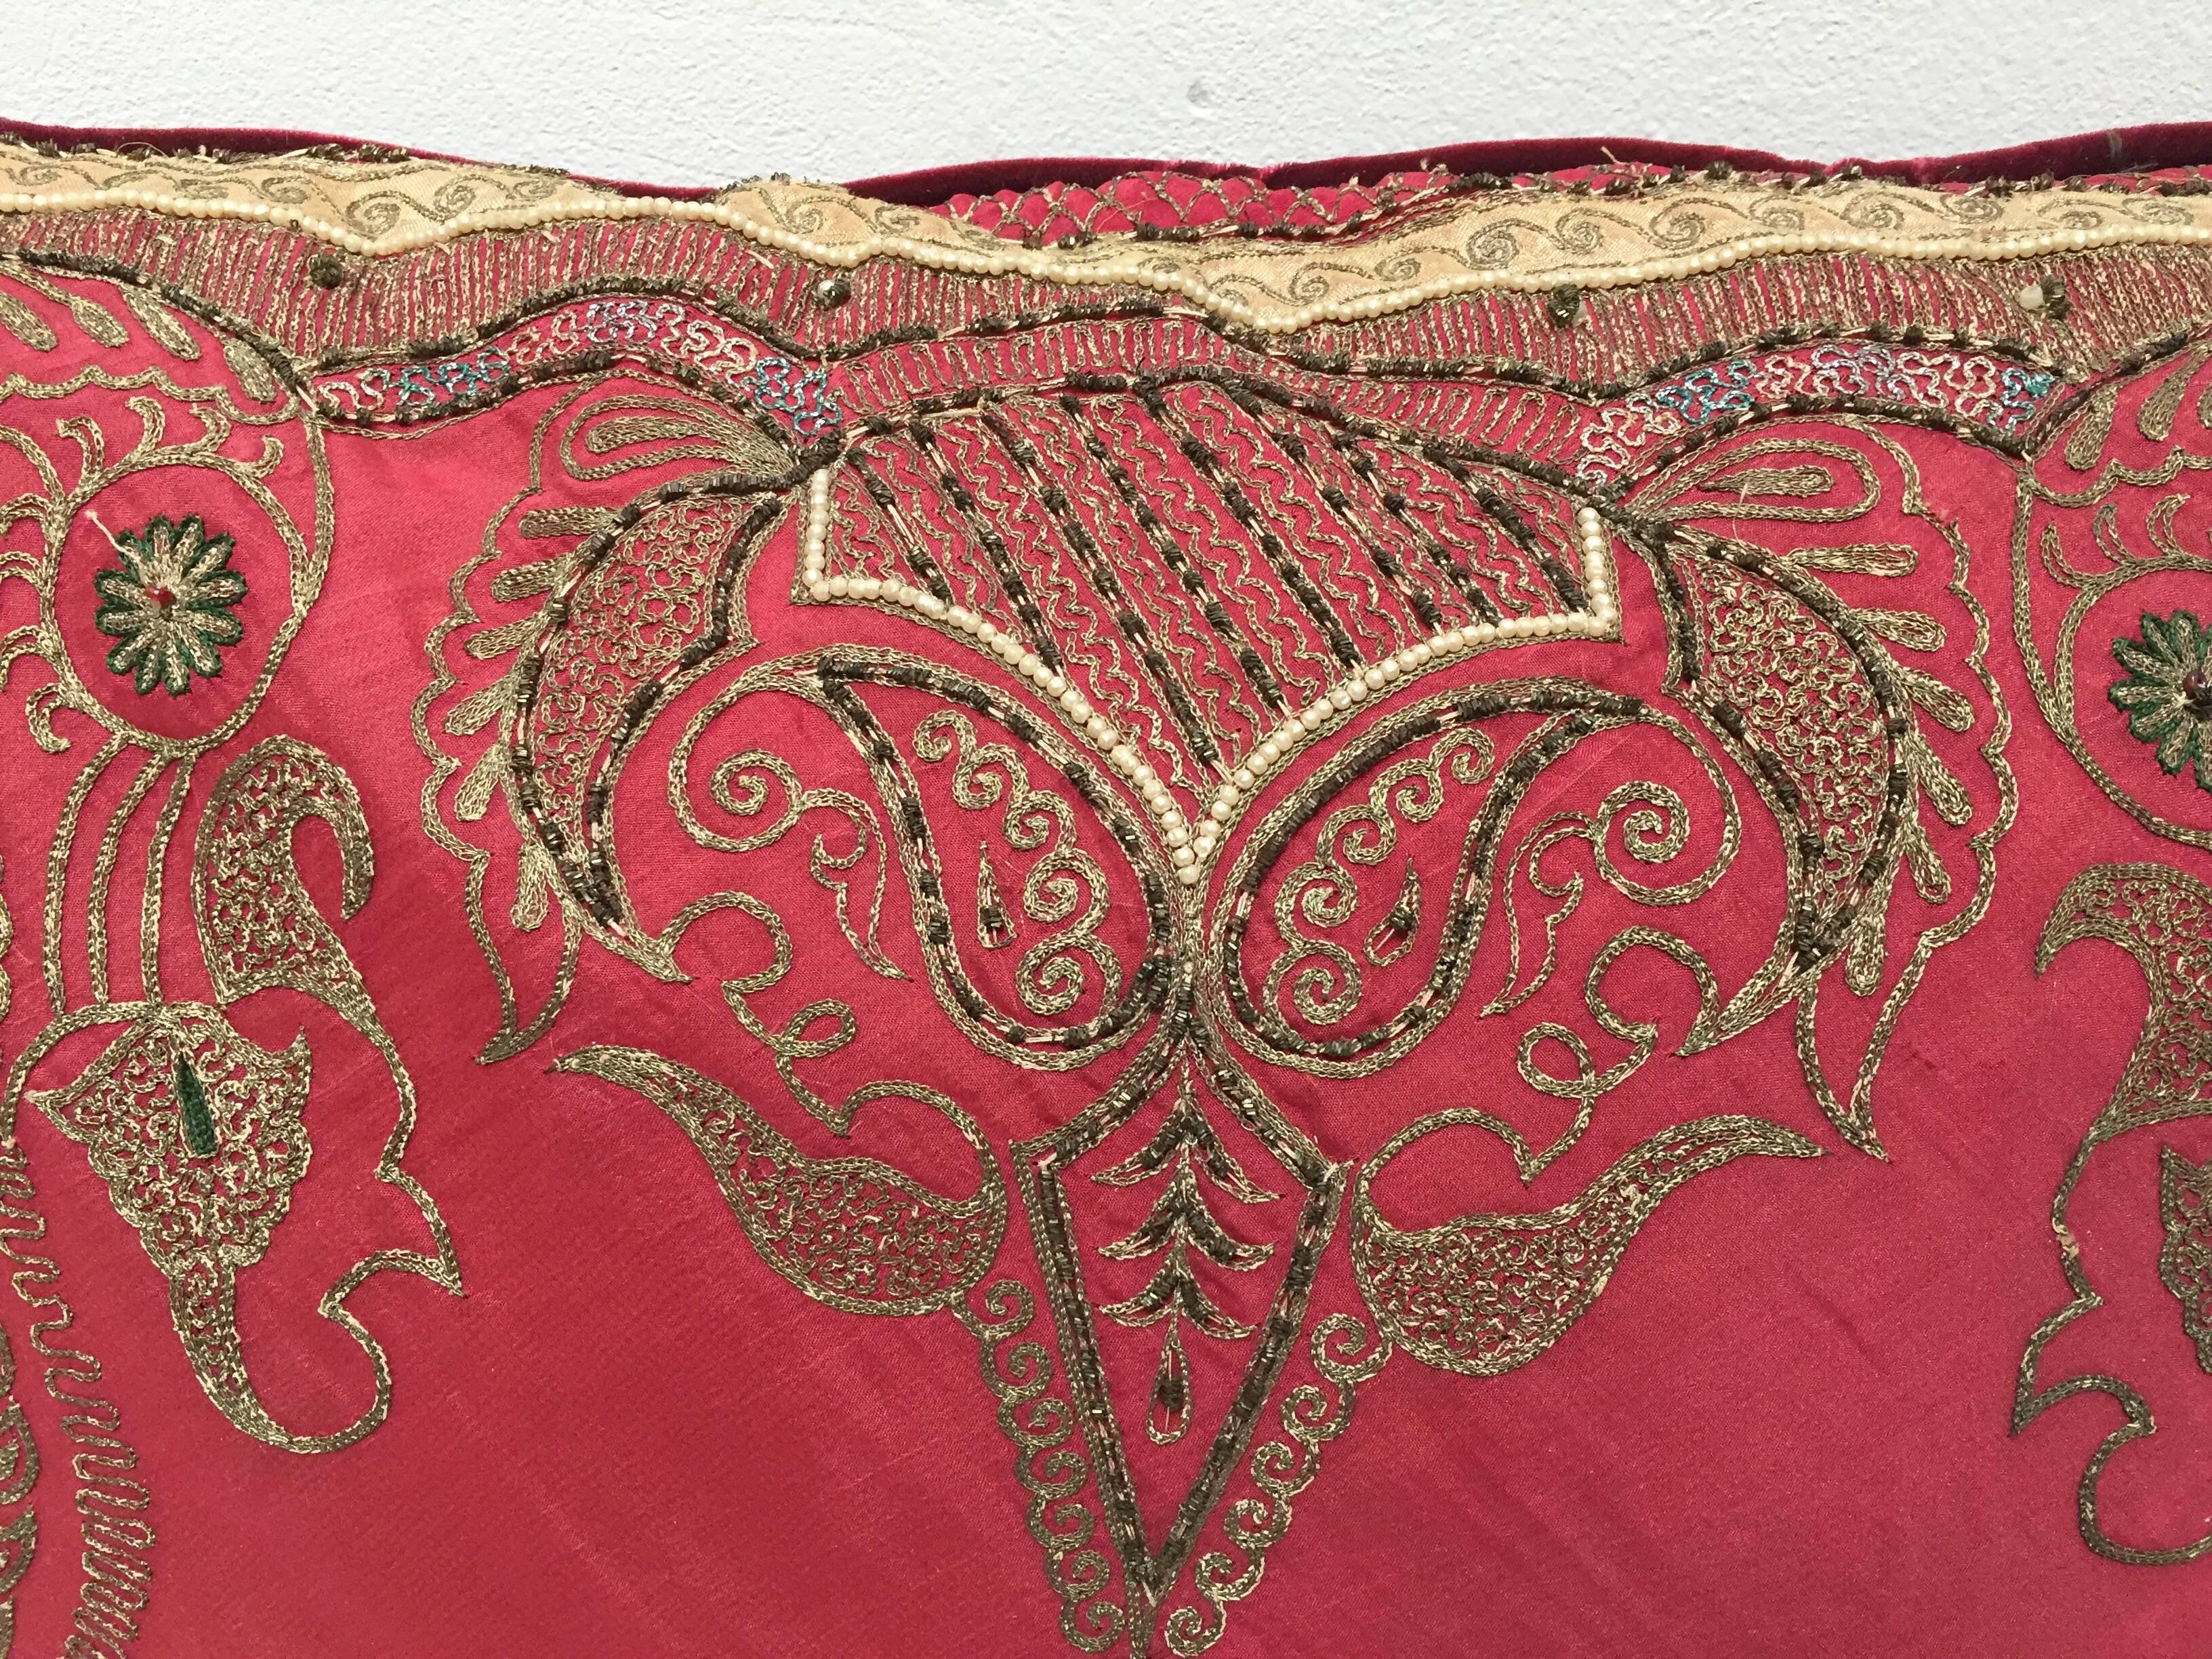 Antique Turkish Ottoman Silk Pillows with Metallic Threads a Pair 10